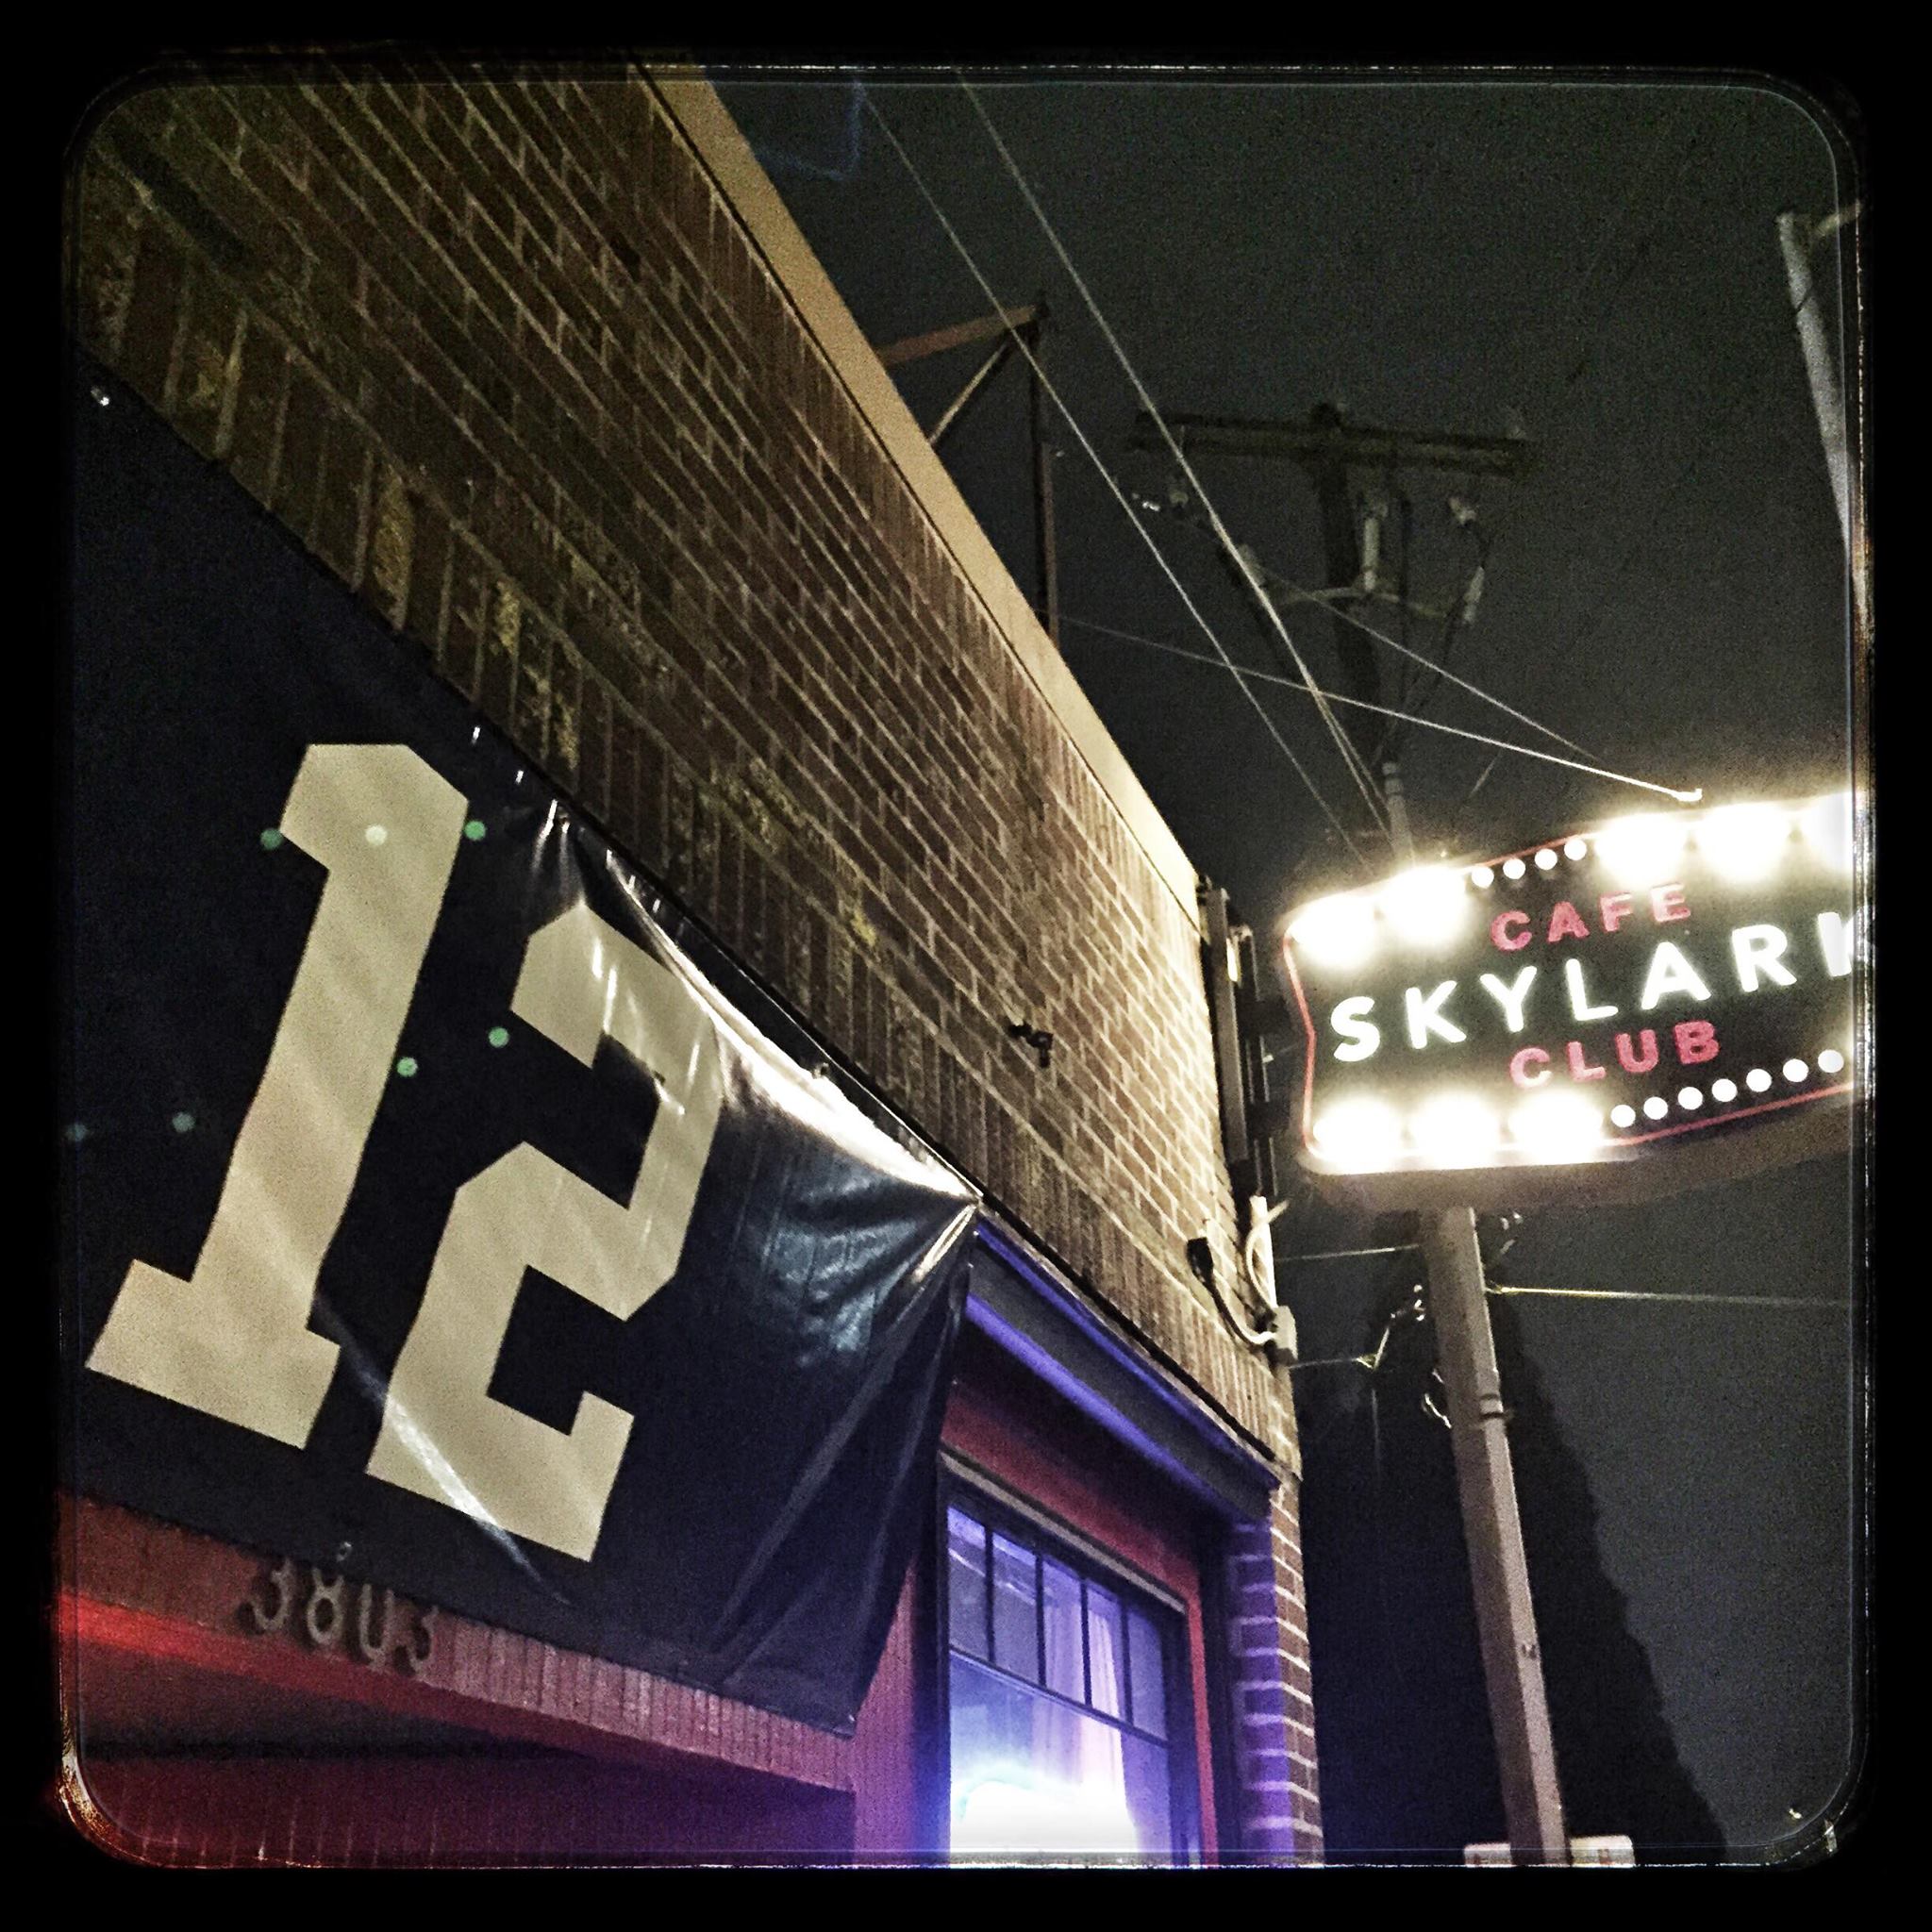 Skylark Cafe & Club